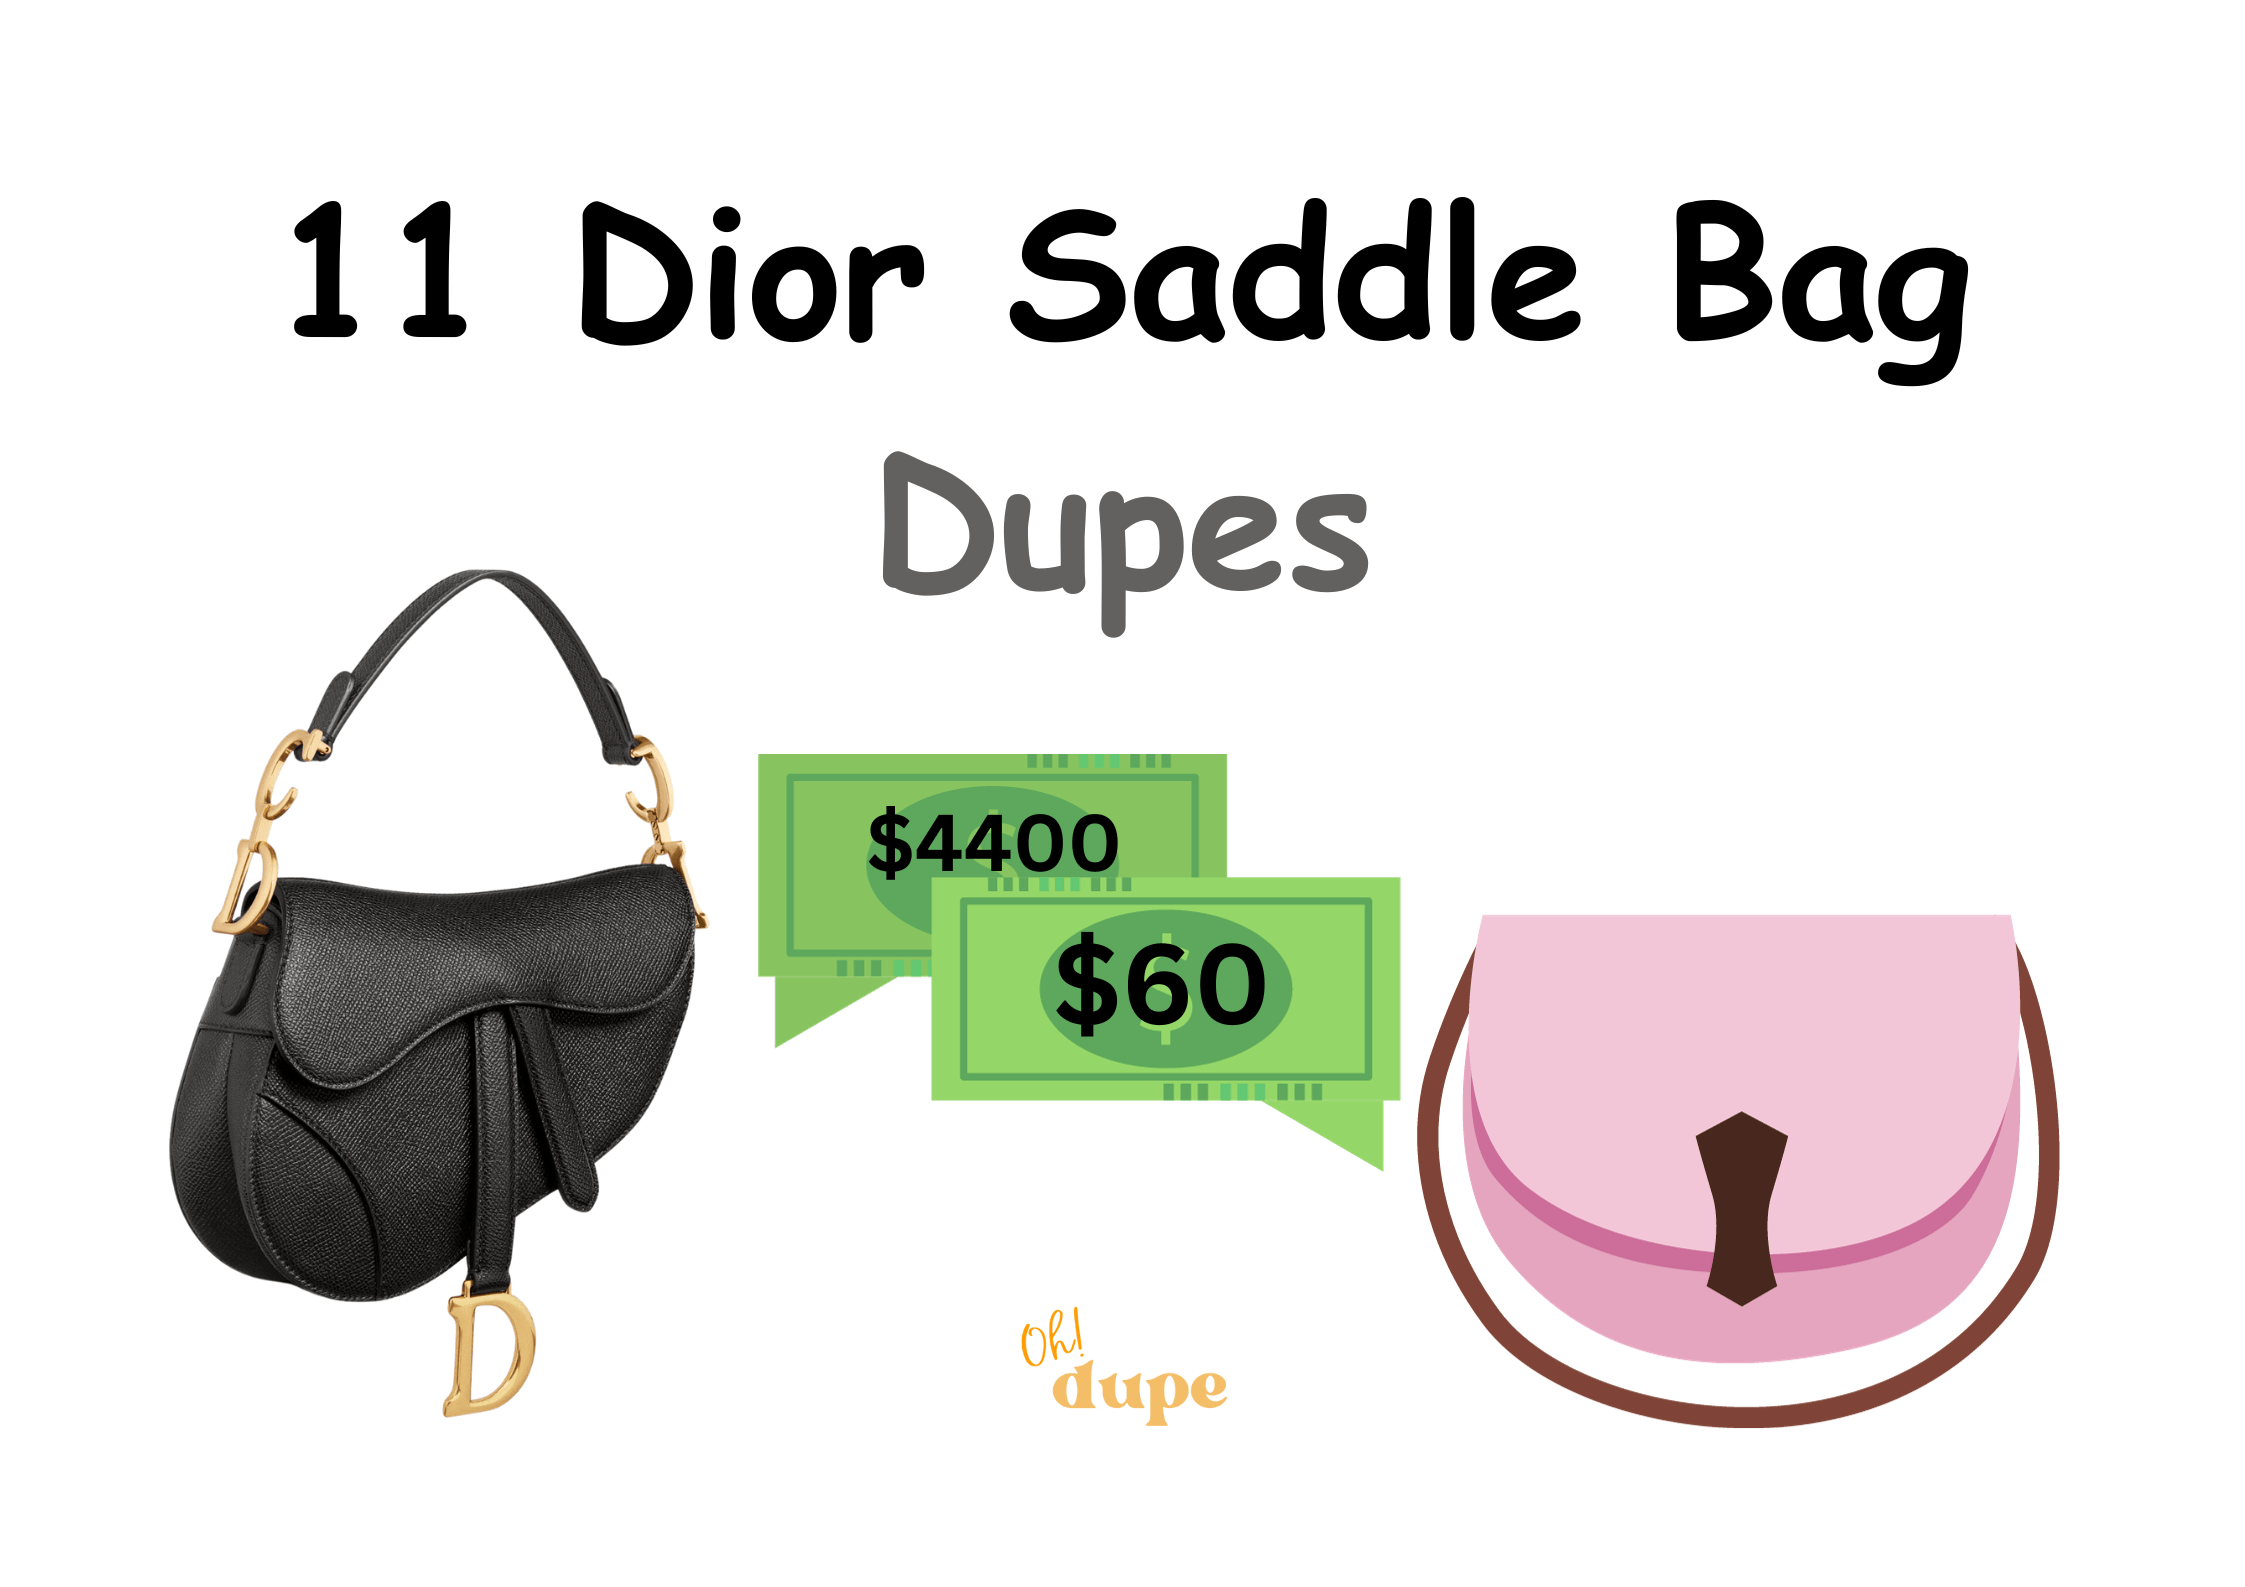 Dior Saddle Bag Dupe